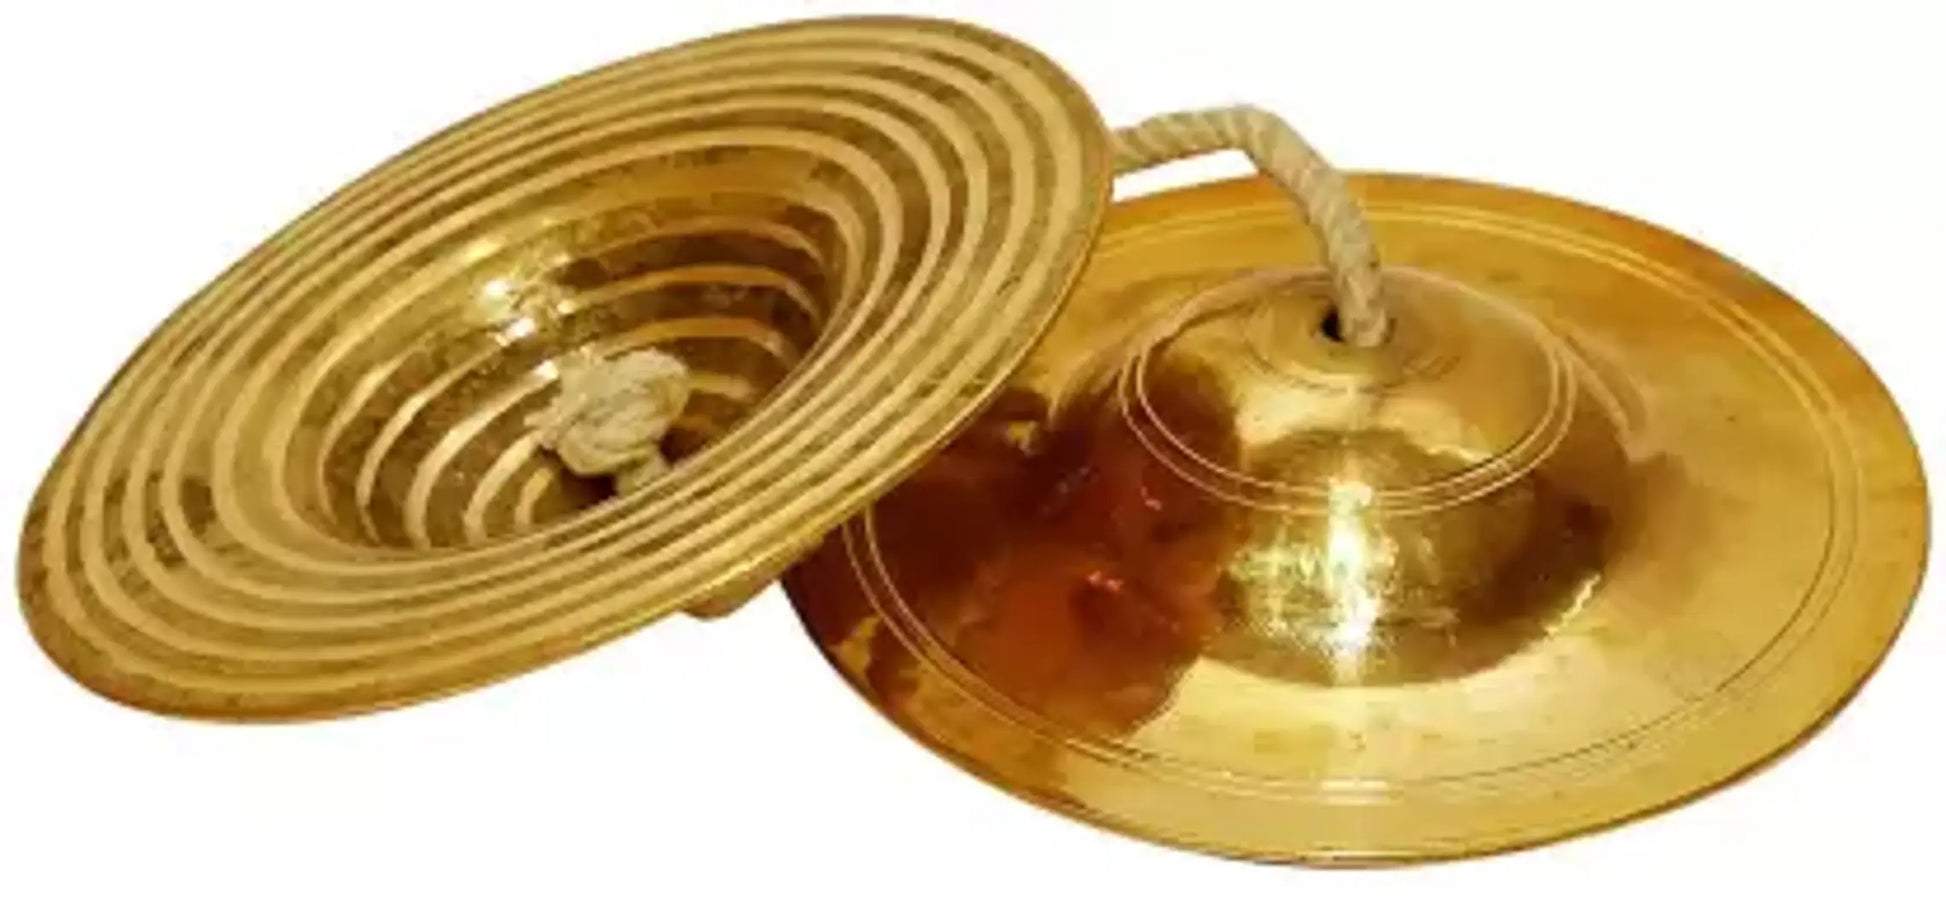 Brass Percussion Instrument - Hand Cymbals Manjira Pair - Indian Musical Instrument Kartal Instrument